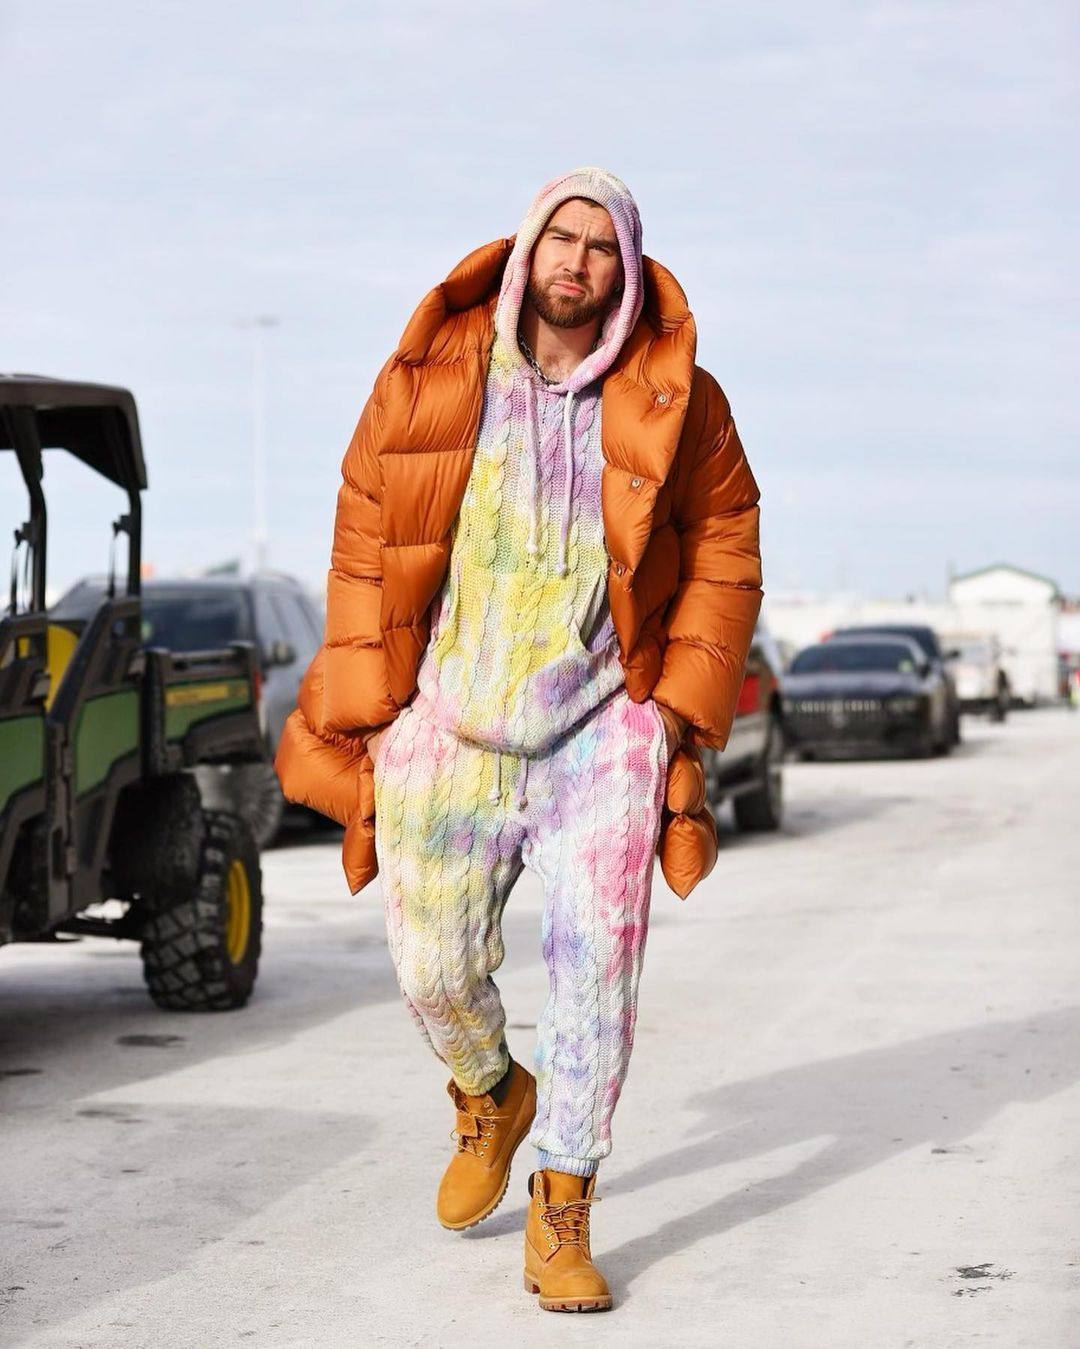 Megastar Taylor Swift has brought the NFL’s Travis Kelce into the fashion mainstream. Photo: @killatrav/Instagram